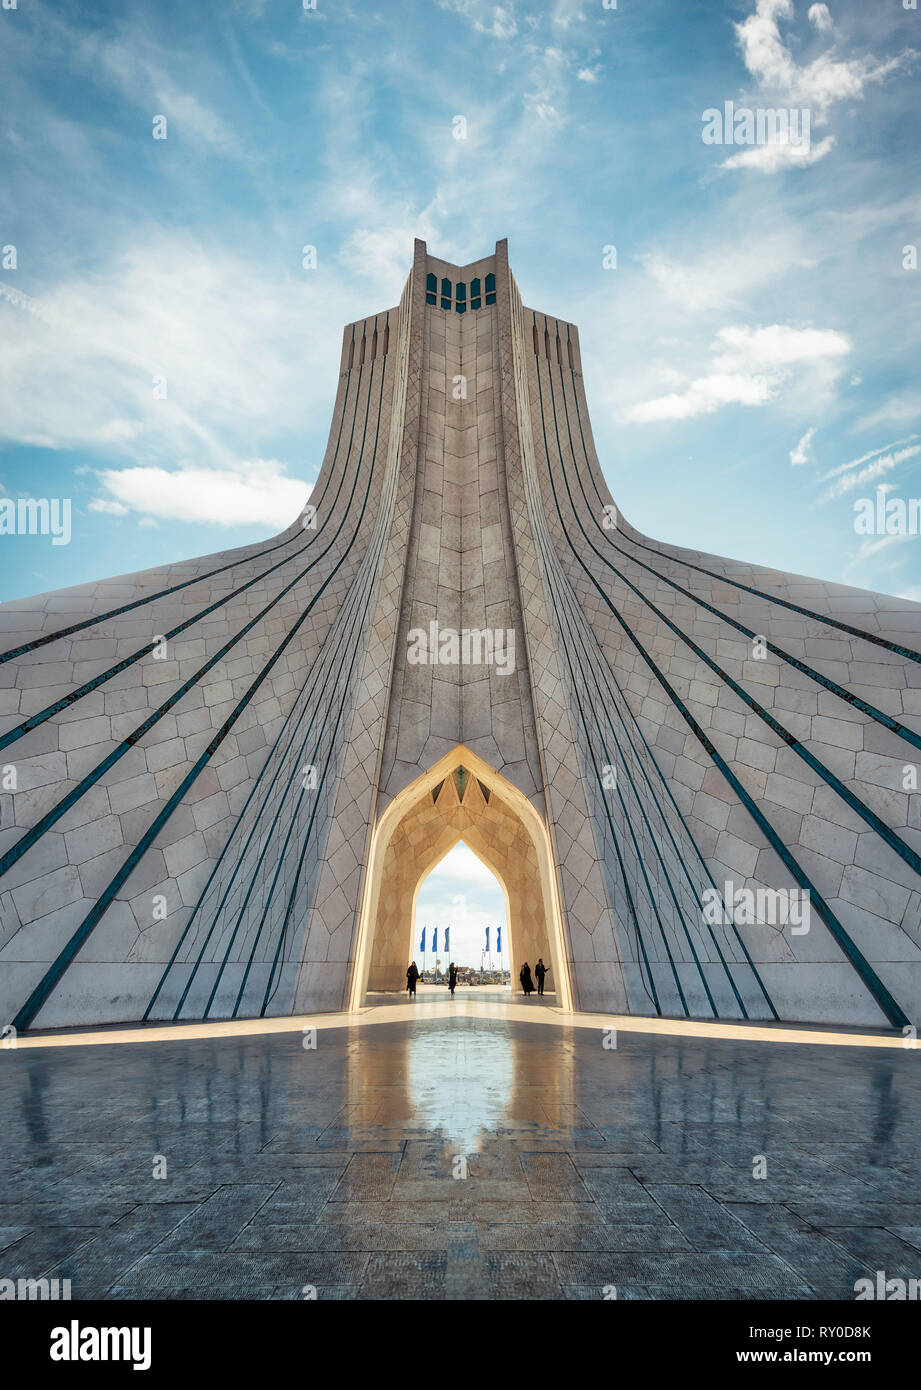 Azadi Tower in Tehran, Iran, taken in January 2019 taken in hdr Stock Photo  - Alamy